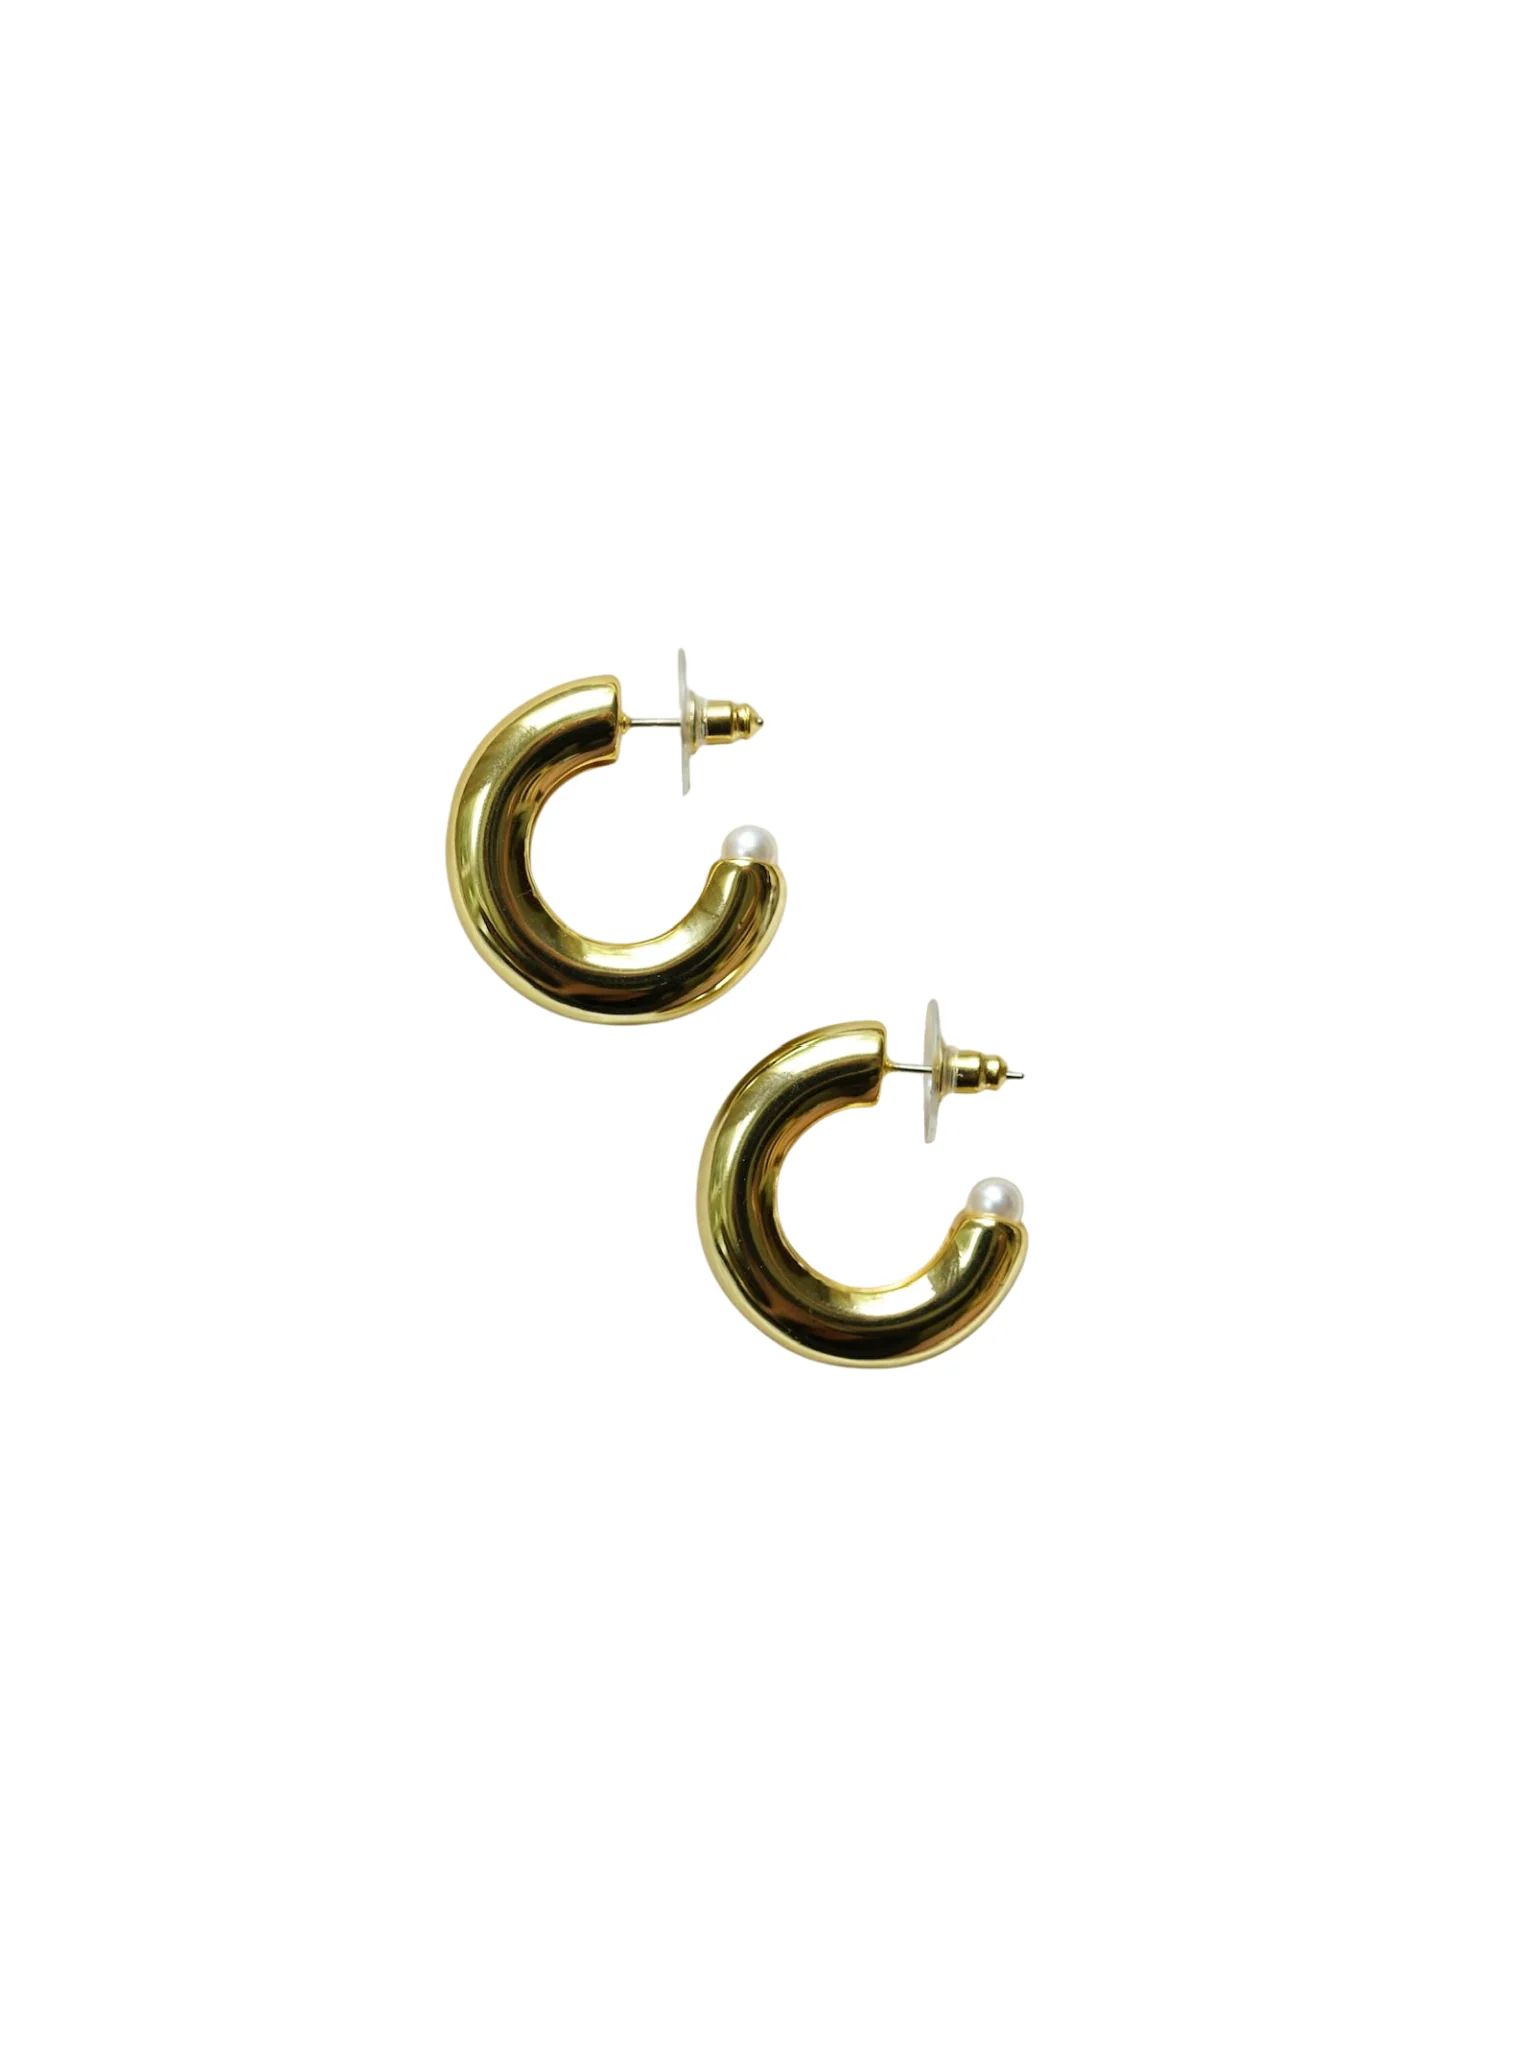 Petite chunky golden hoops + pearl | Nicola Bathie Jewelry